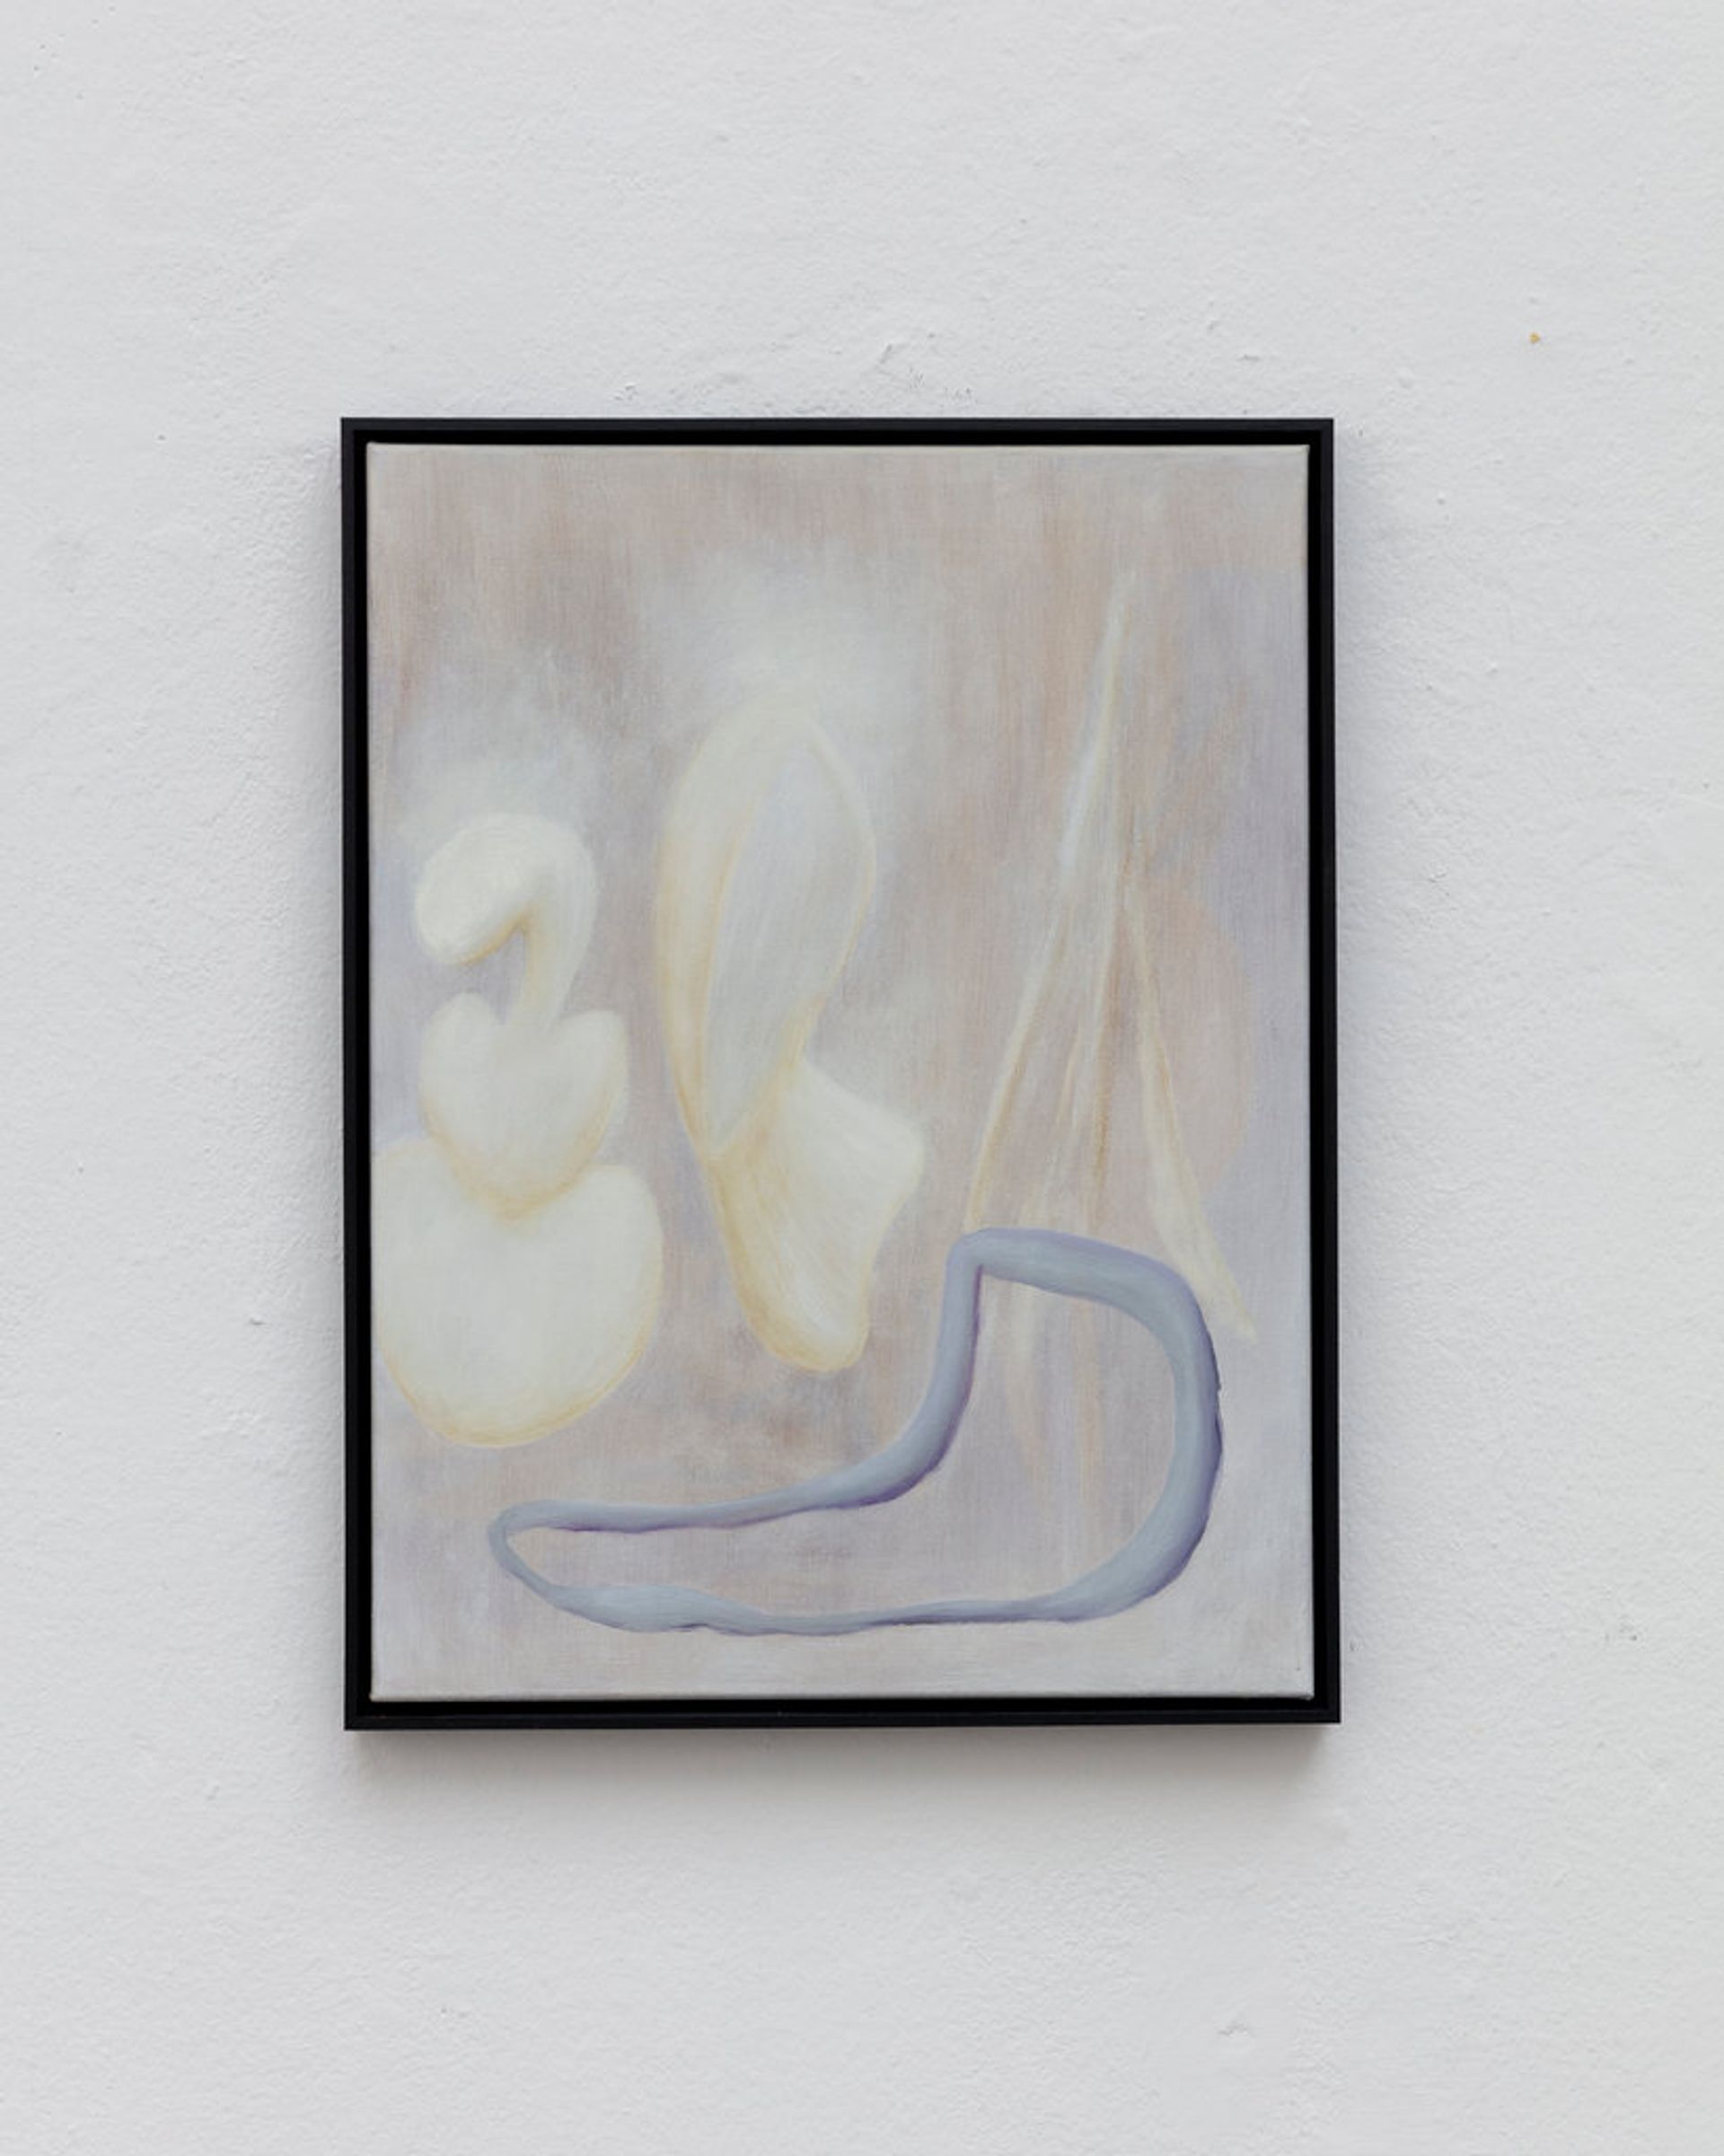 Veronika Hilger, Untitled, 2020, oil on canvas, 60 × 45 cm